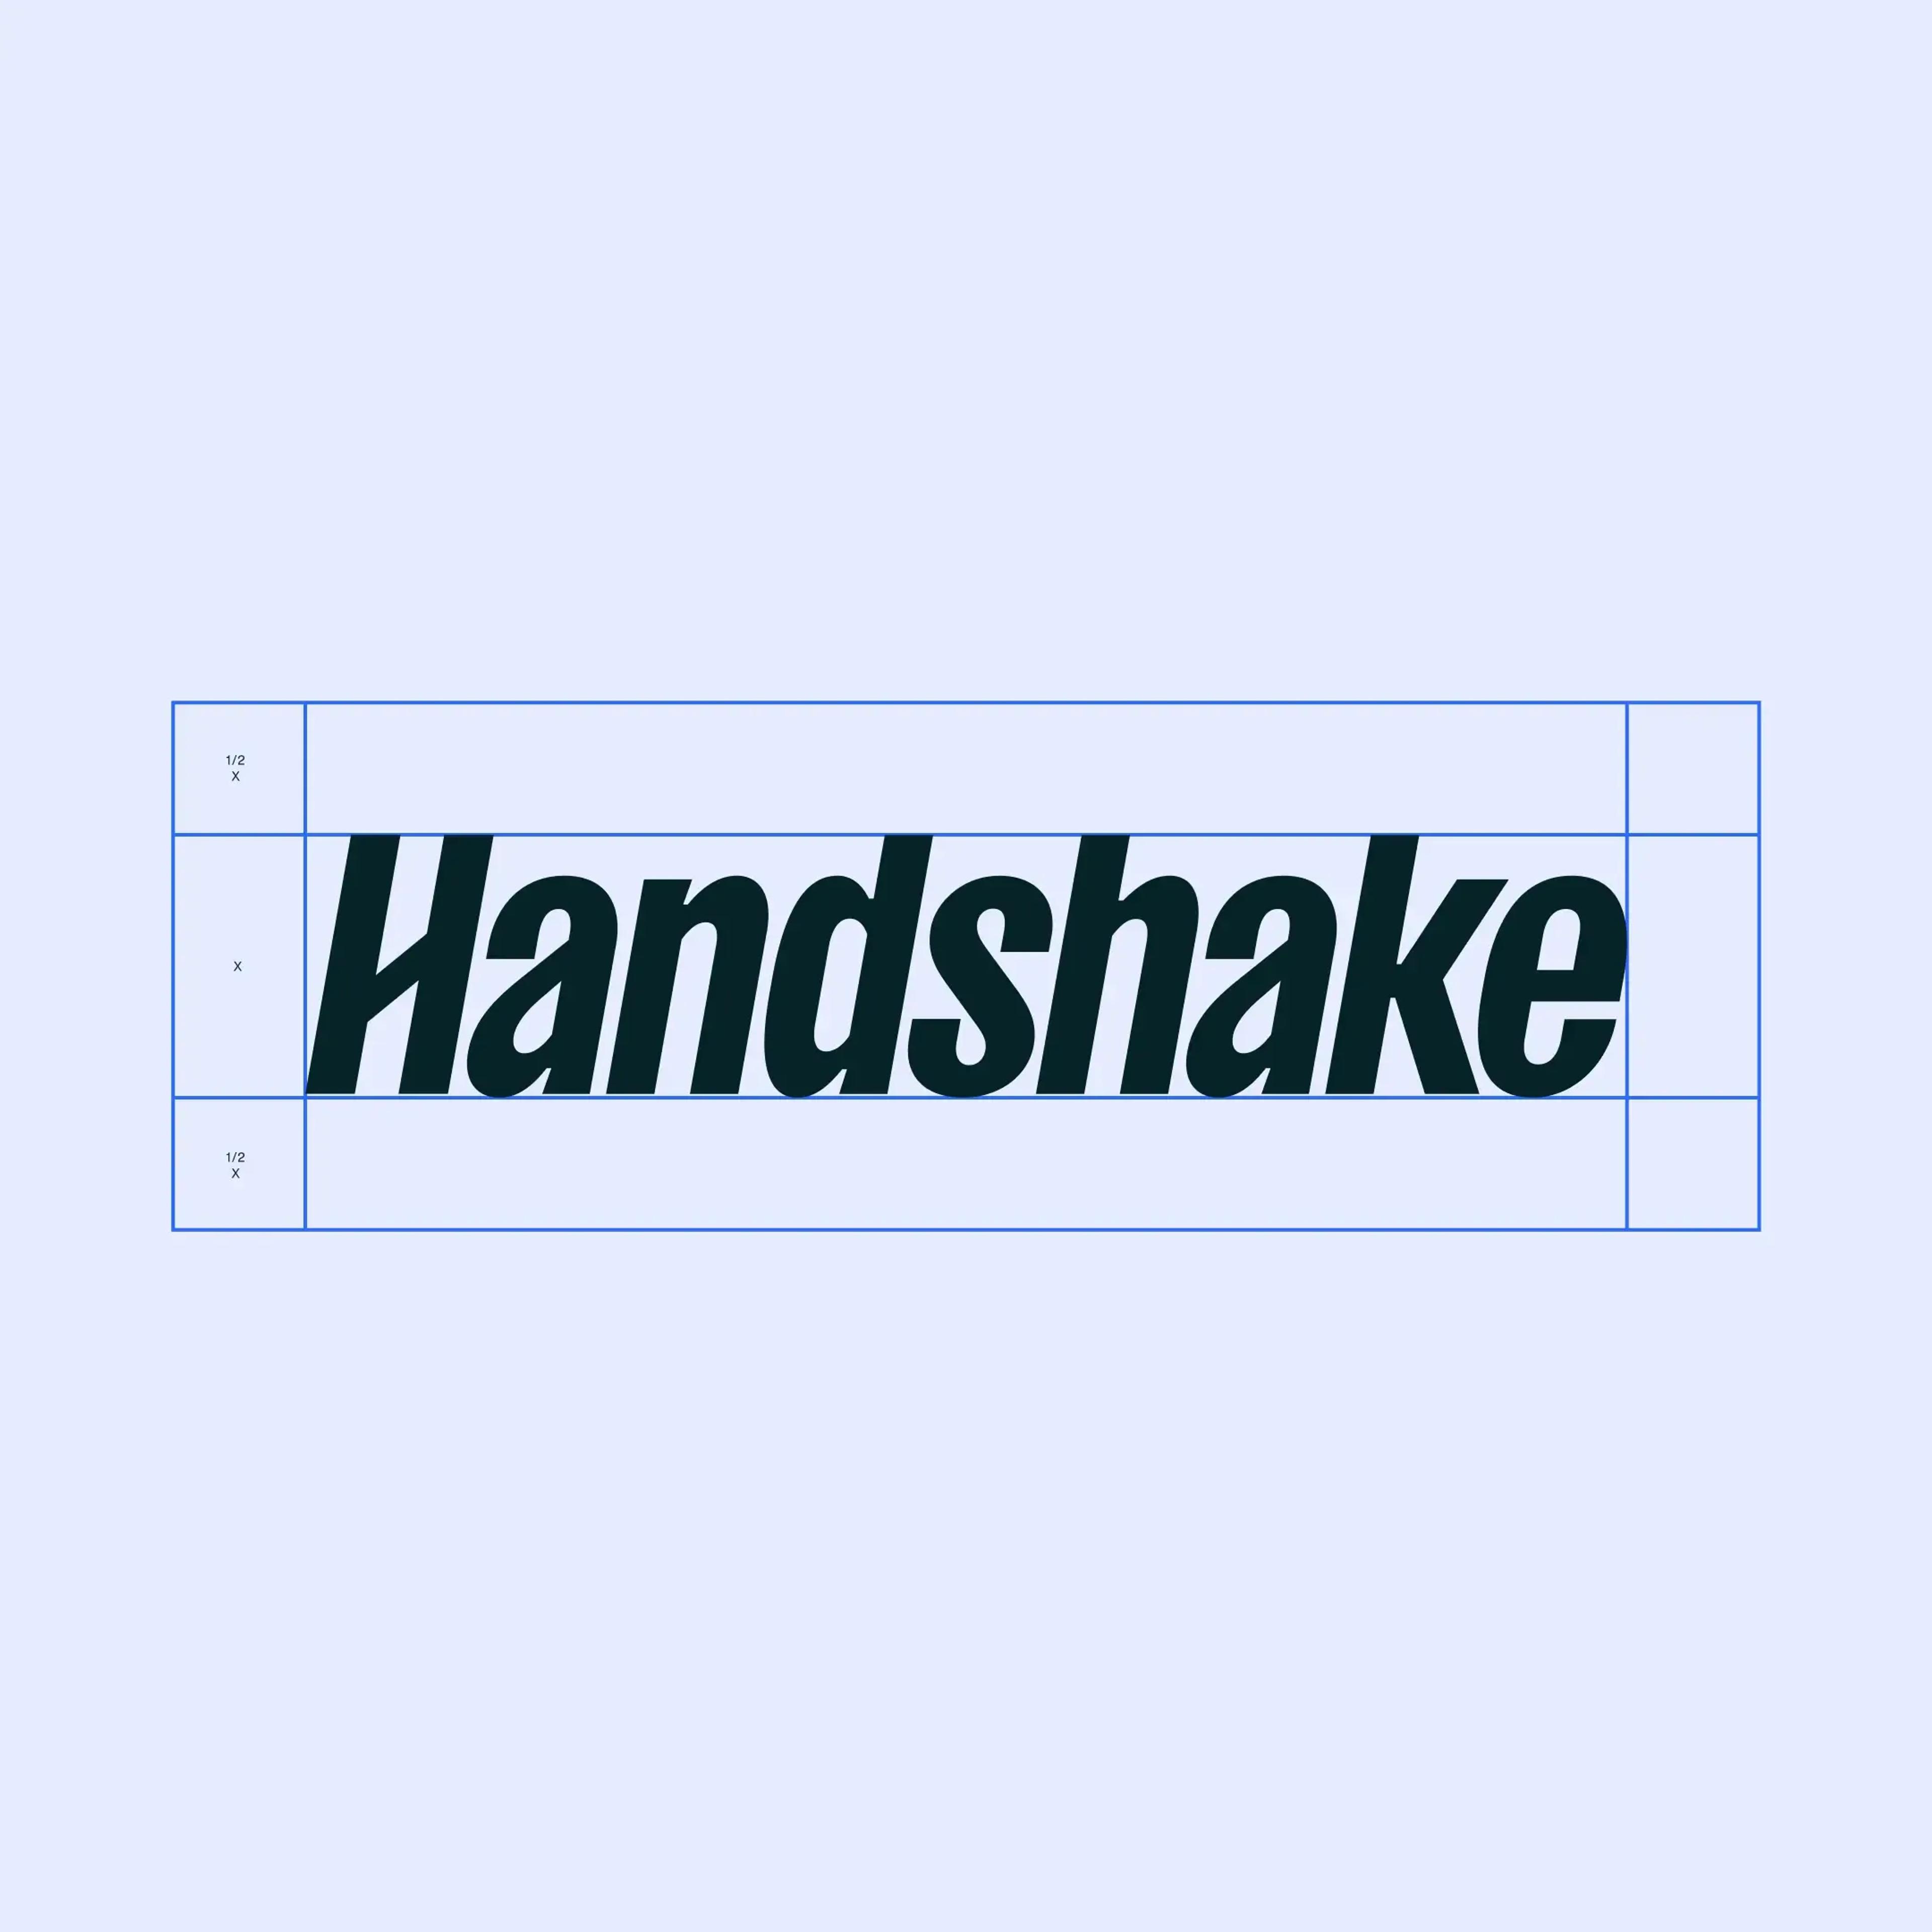 Handshake logos